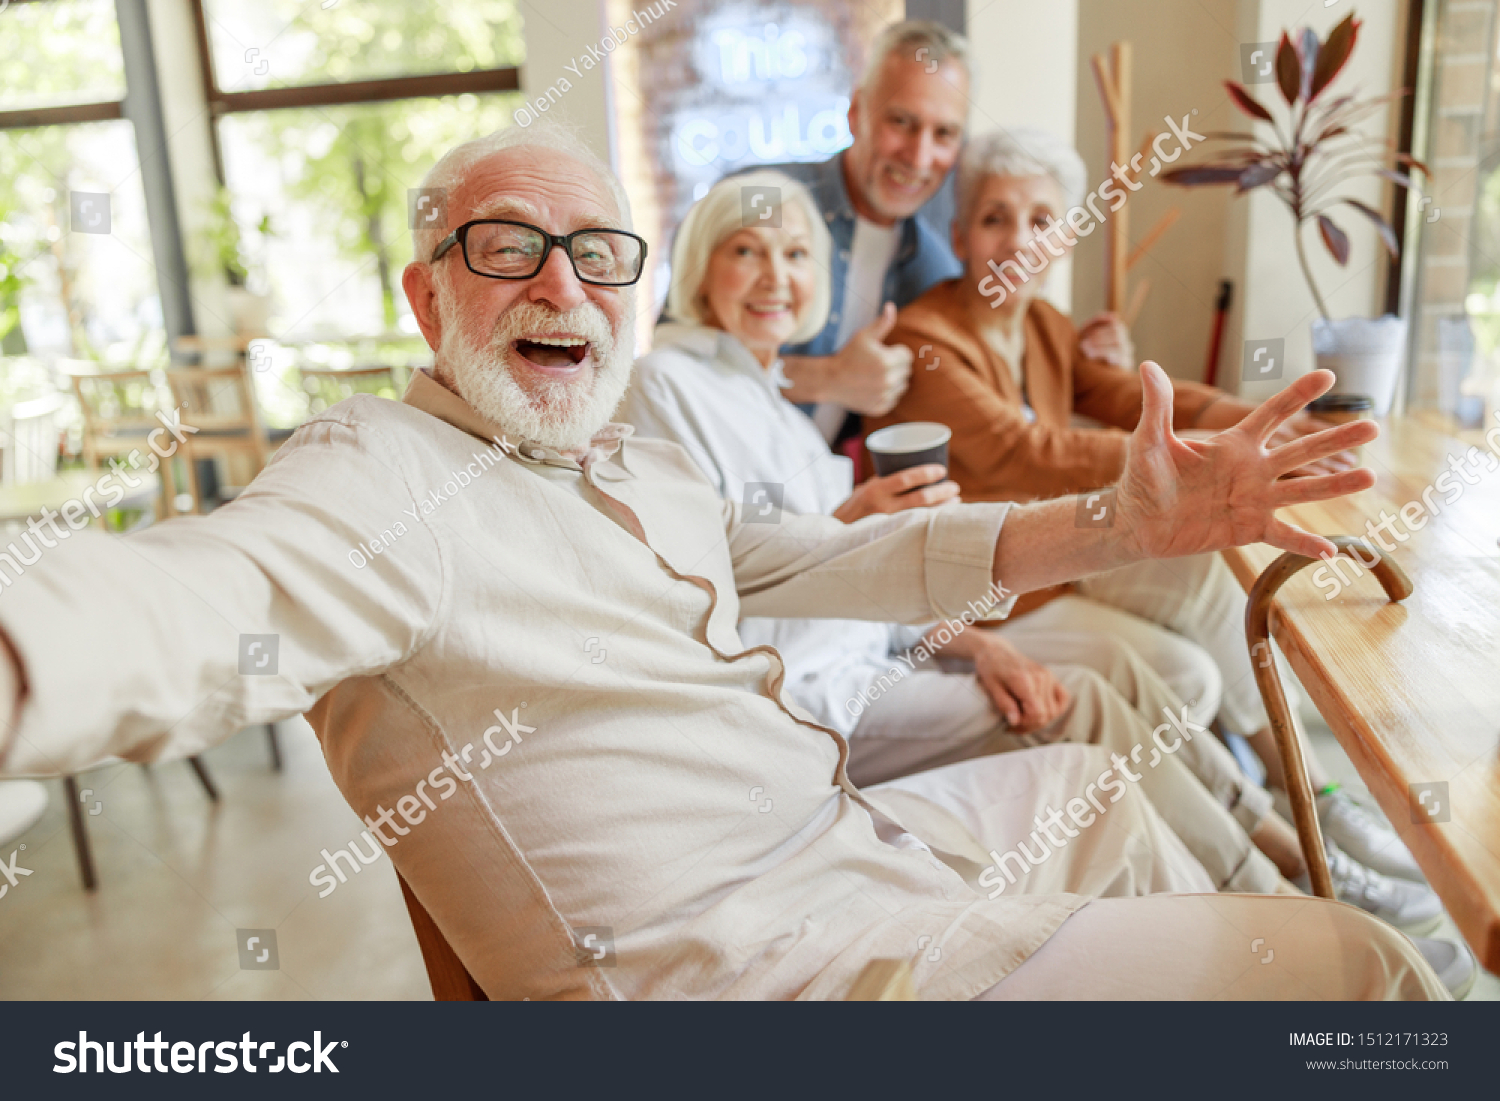 Joyful senior man spending time with friends stock photo #1512171323